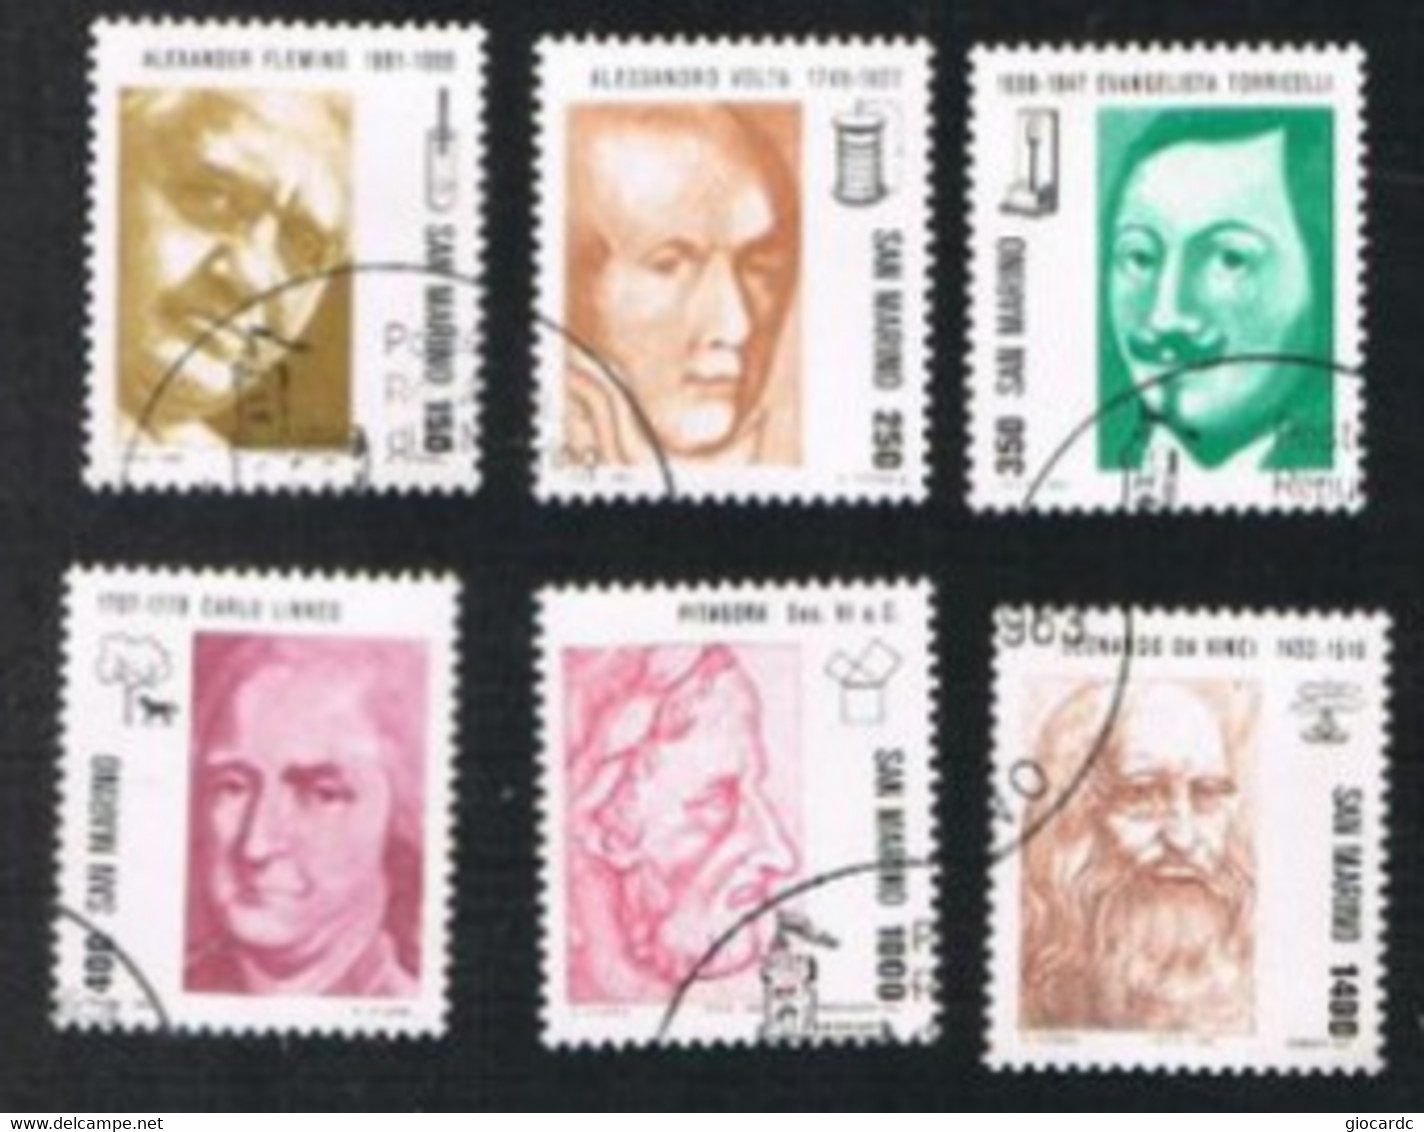 SAN MARINO - UNIF. 1112.1117  - 1983 PIONIERI DELLA SCIENZA (COMPLET SET OF 6)  - USED° - Used Stamps